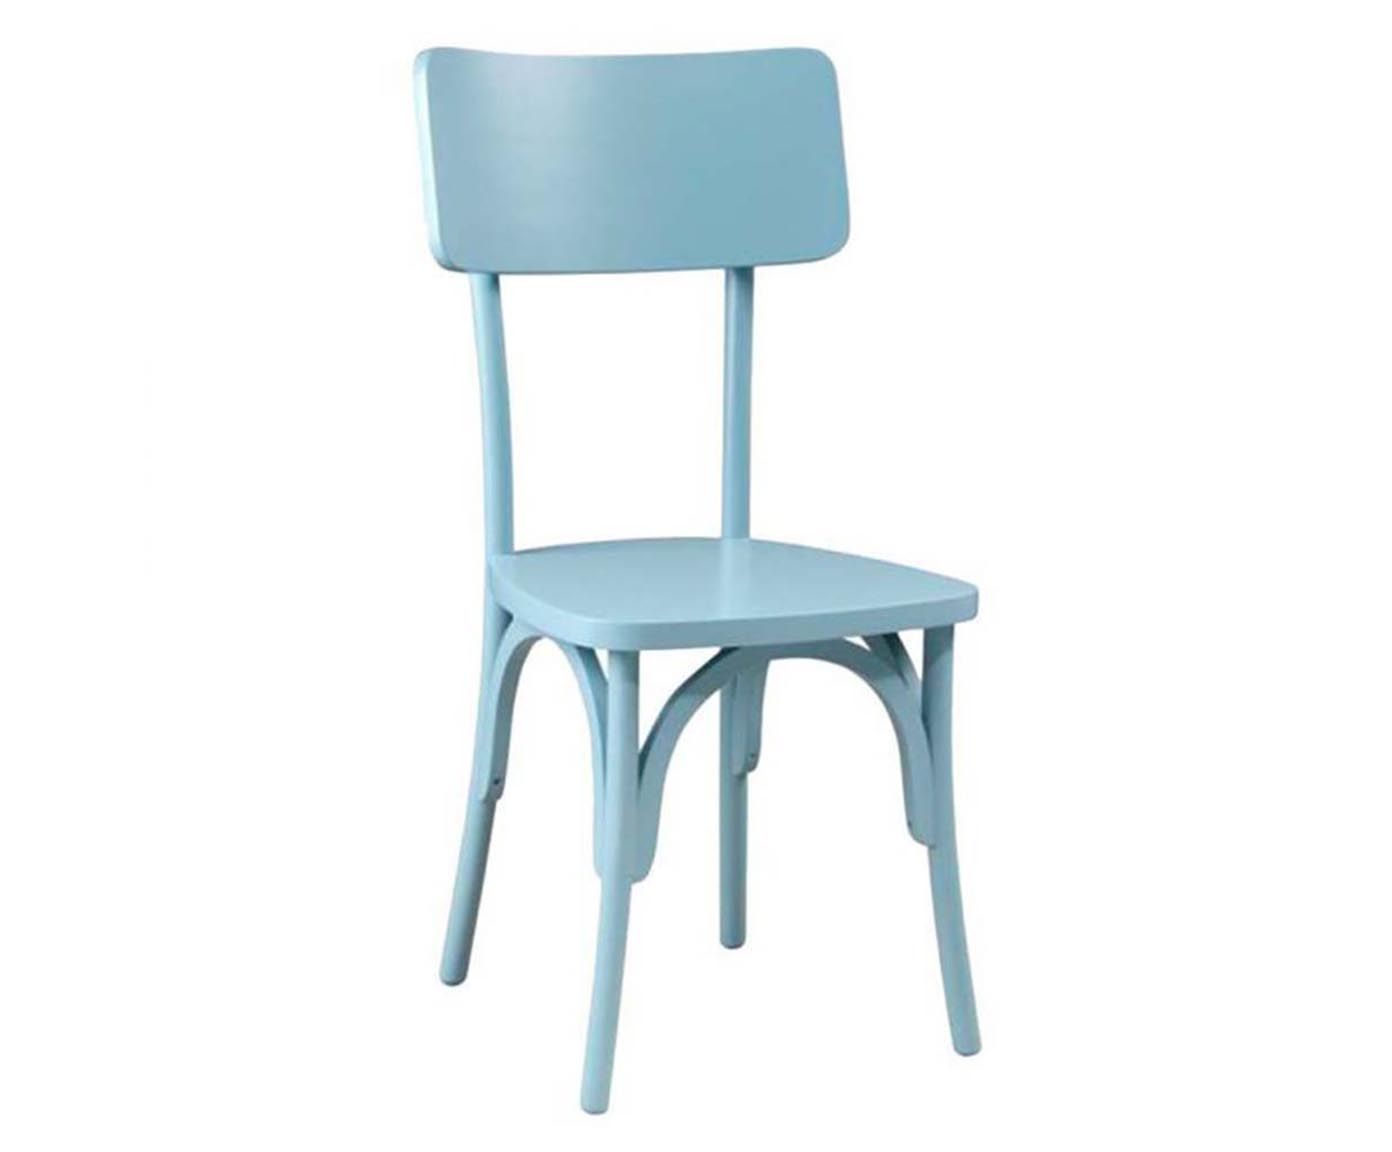 Cadeira romarin square - zen | Westwing.com.br